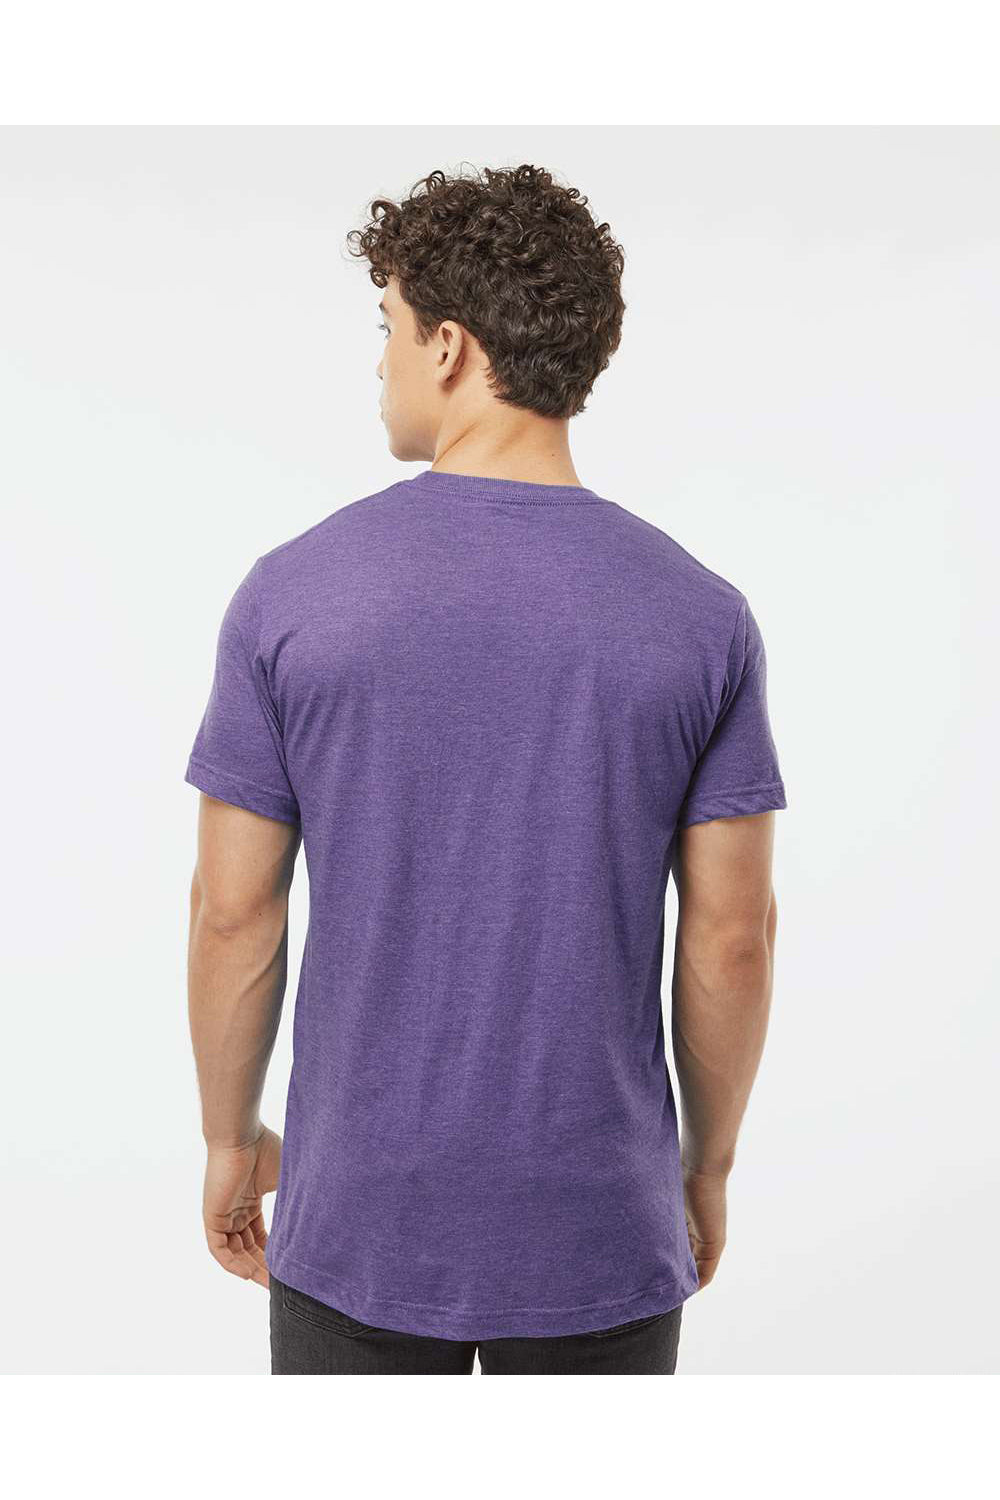 Tultex 202 Mens Fine Jersey Short Sleeve Crewneck T-Shirt Heather Purple Model Back